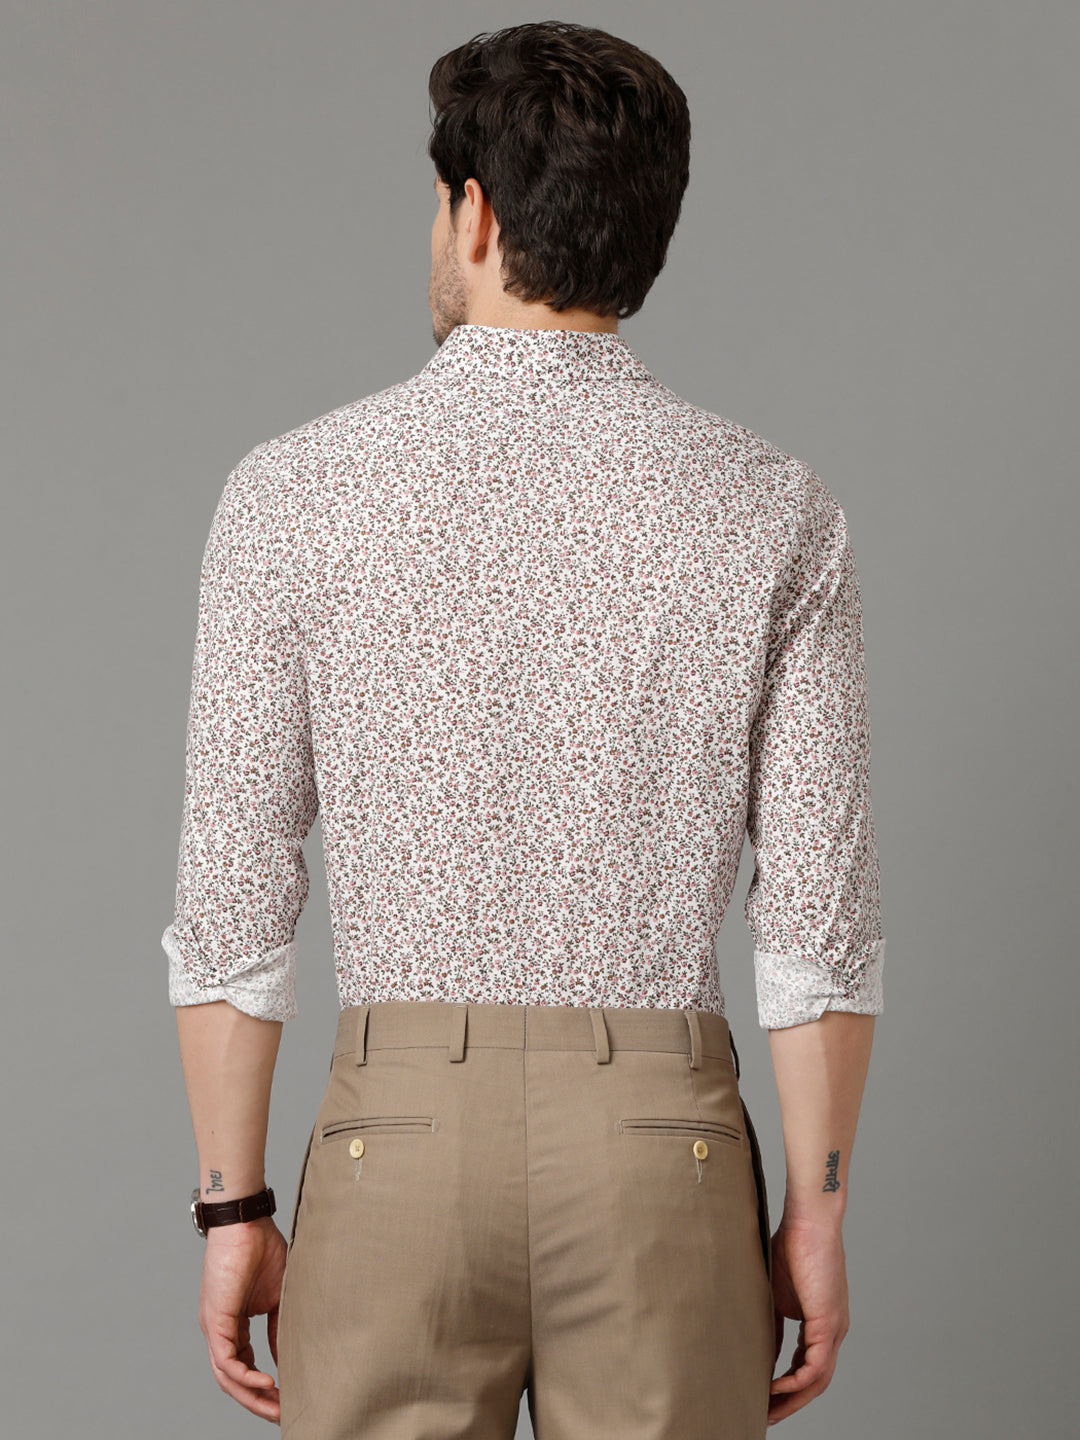 Aldeno Mens Regular Fit Floral Print Multi Casual Cotton Shirt (STIAN)